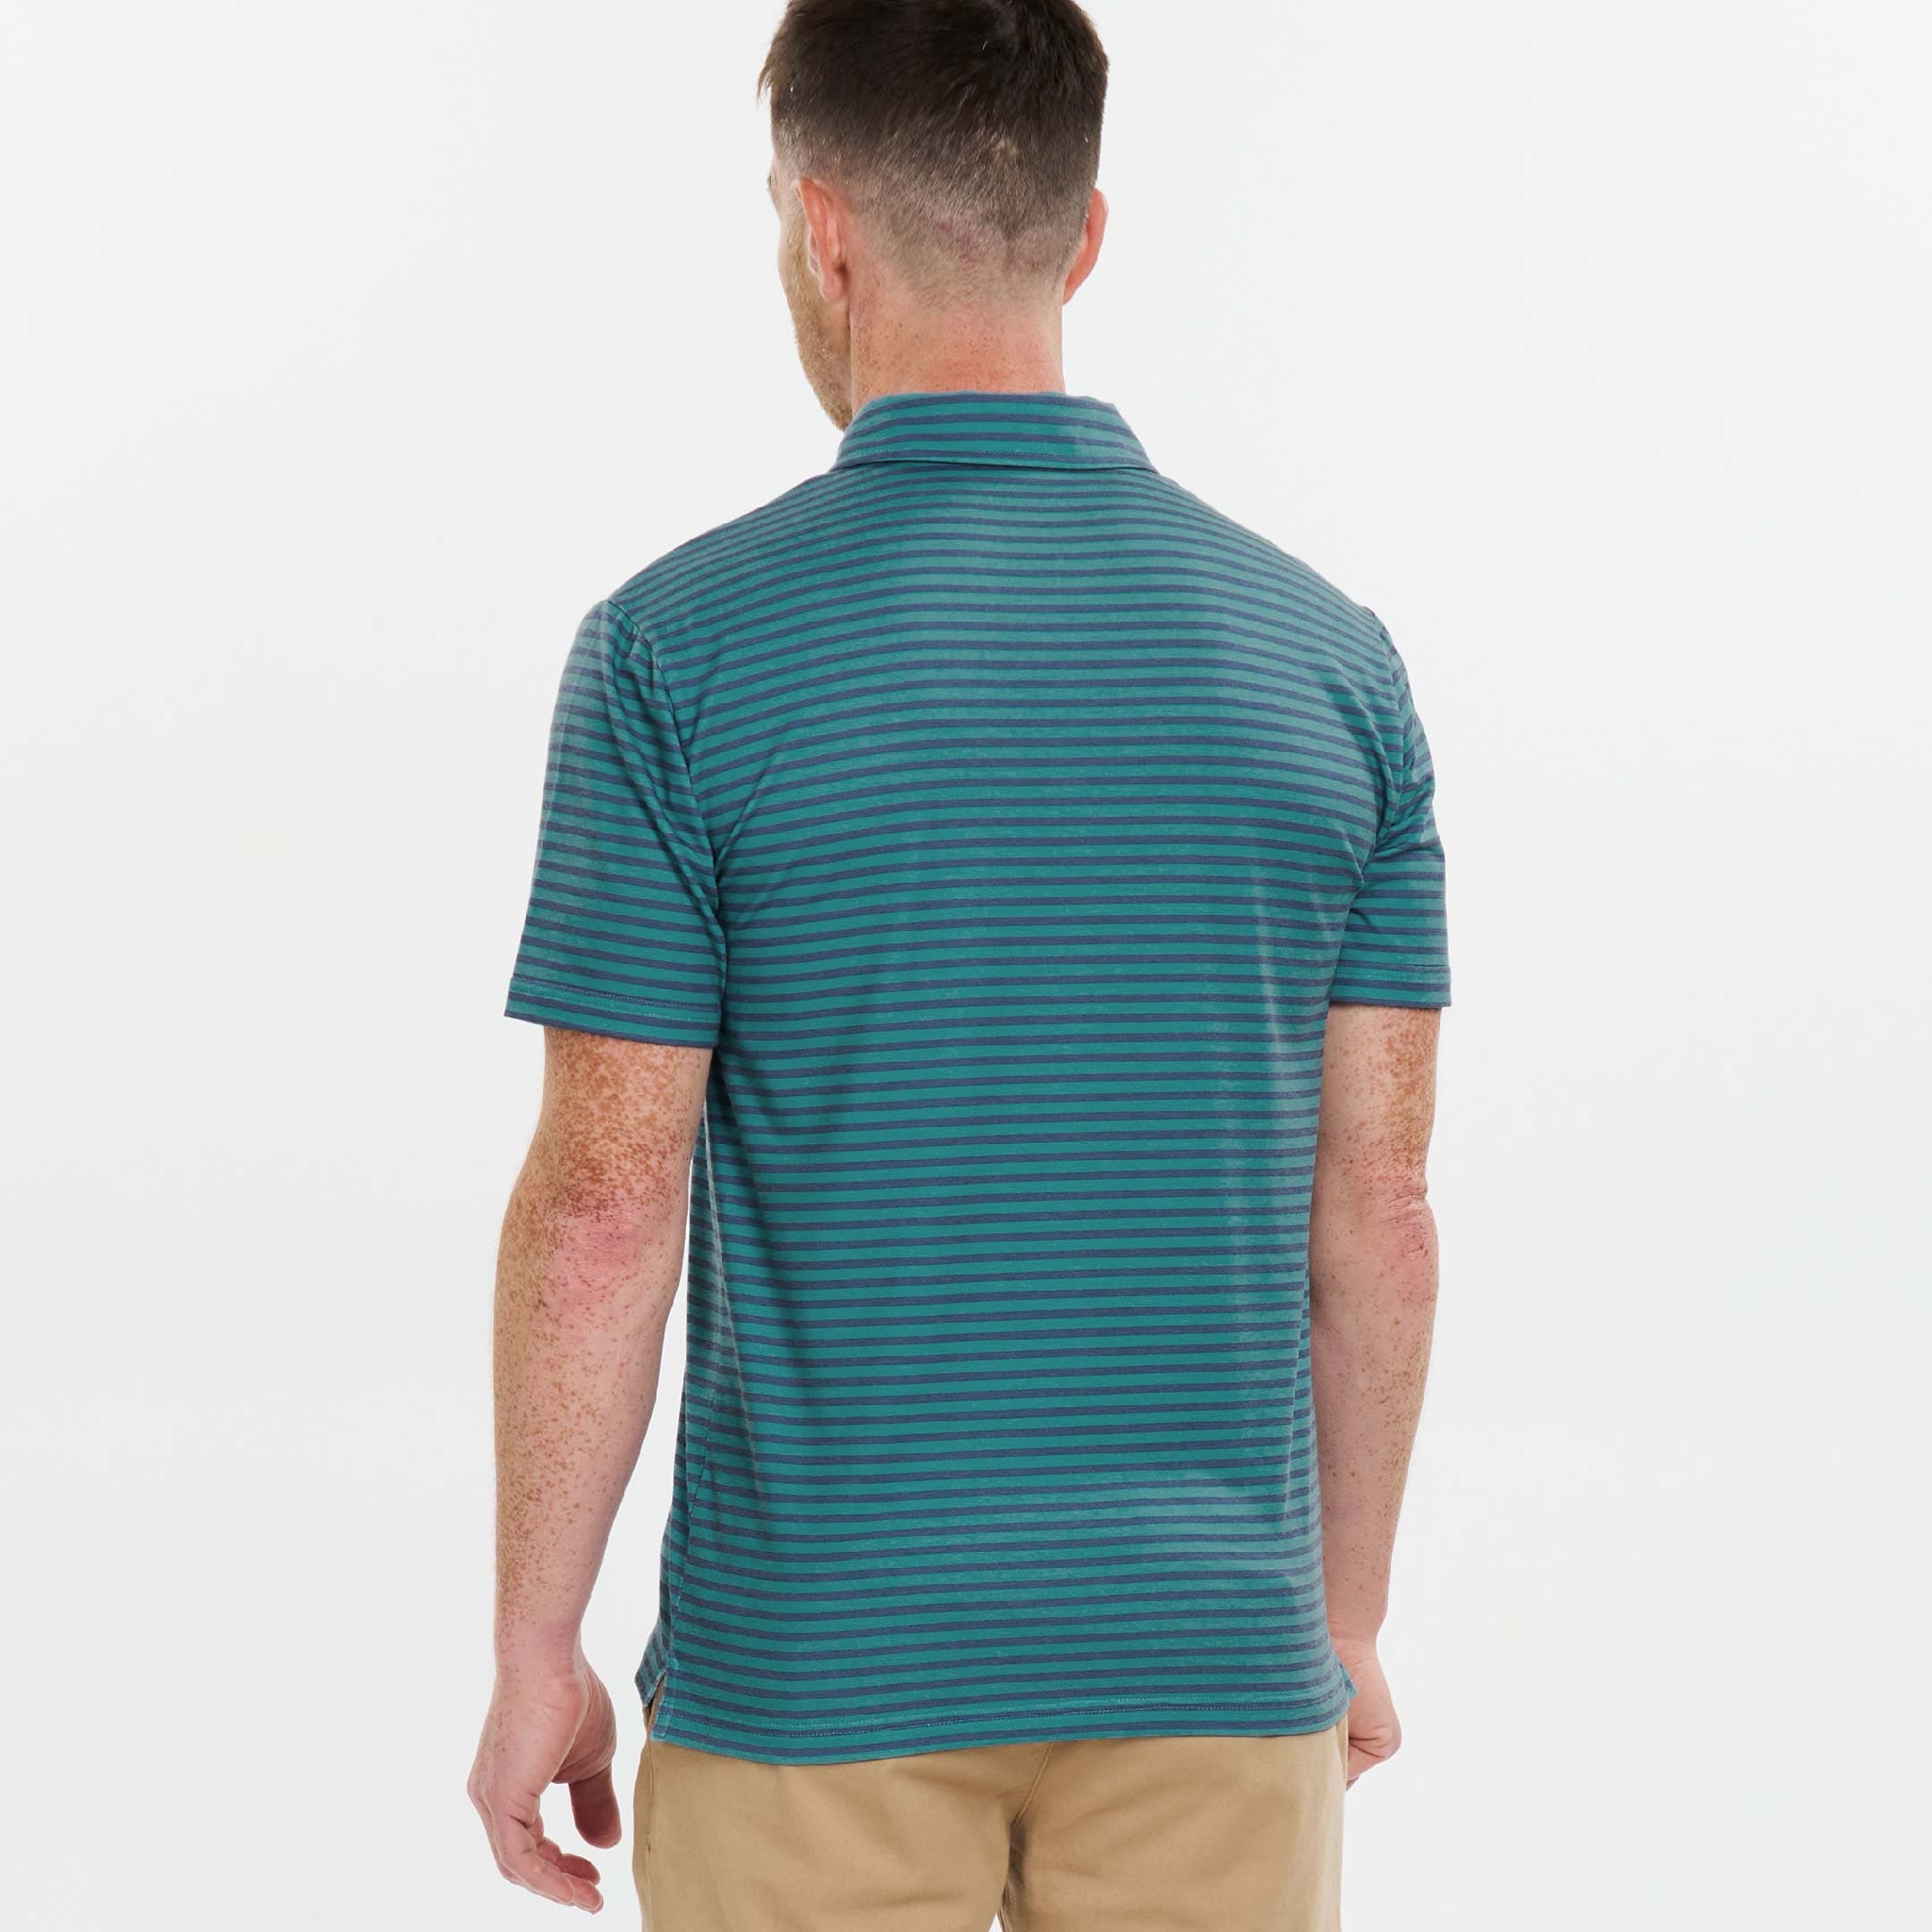 Ash & Erie Cayman Stripes Tech Polo Shirt for Short Men   Tech Polo Shirt